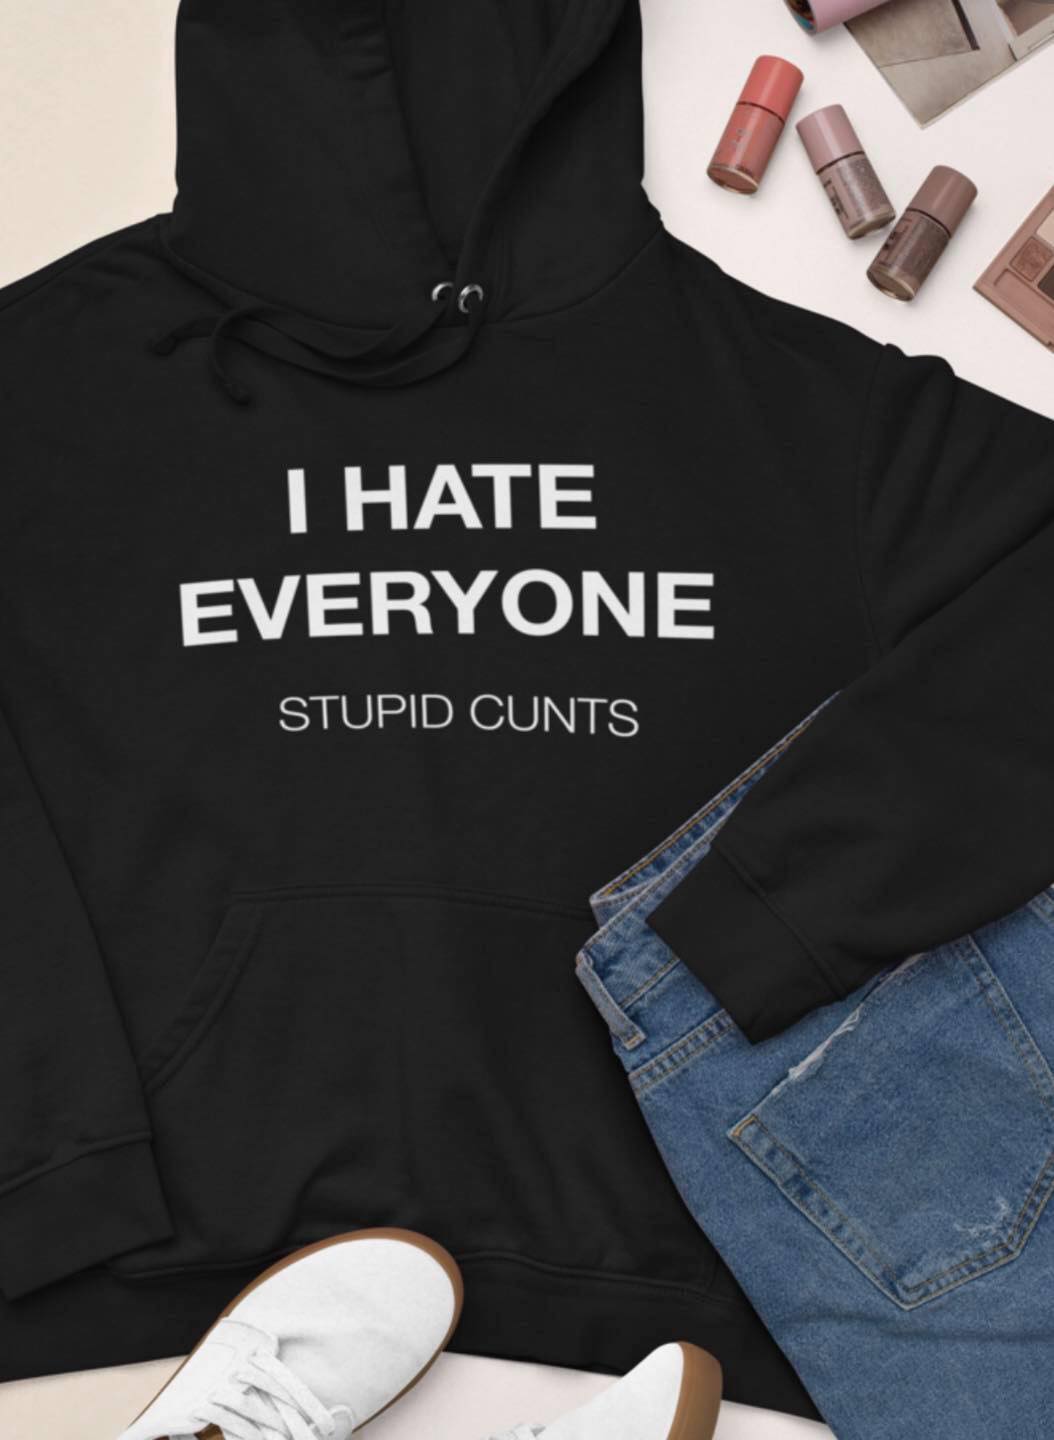 I hate everyone stupid cunts